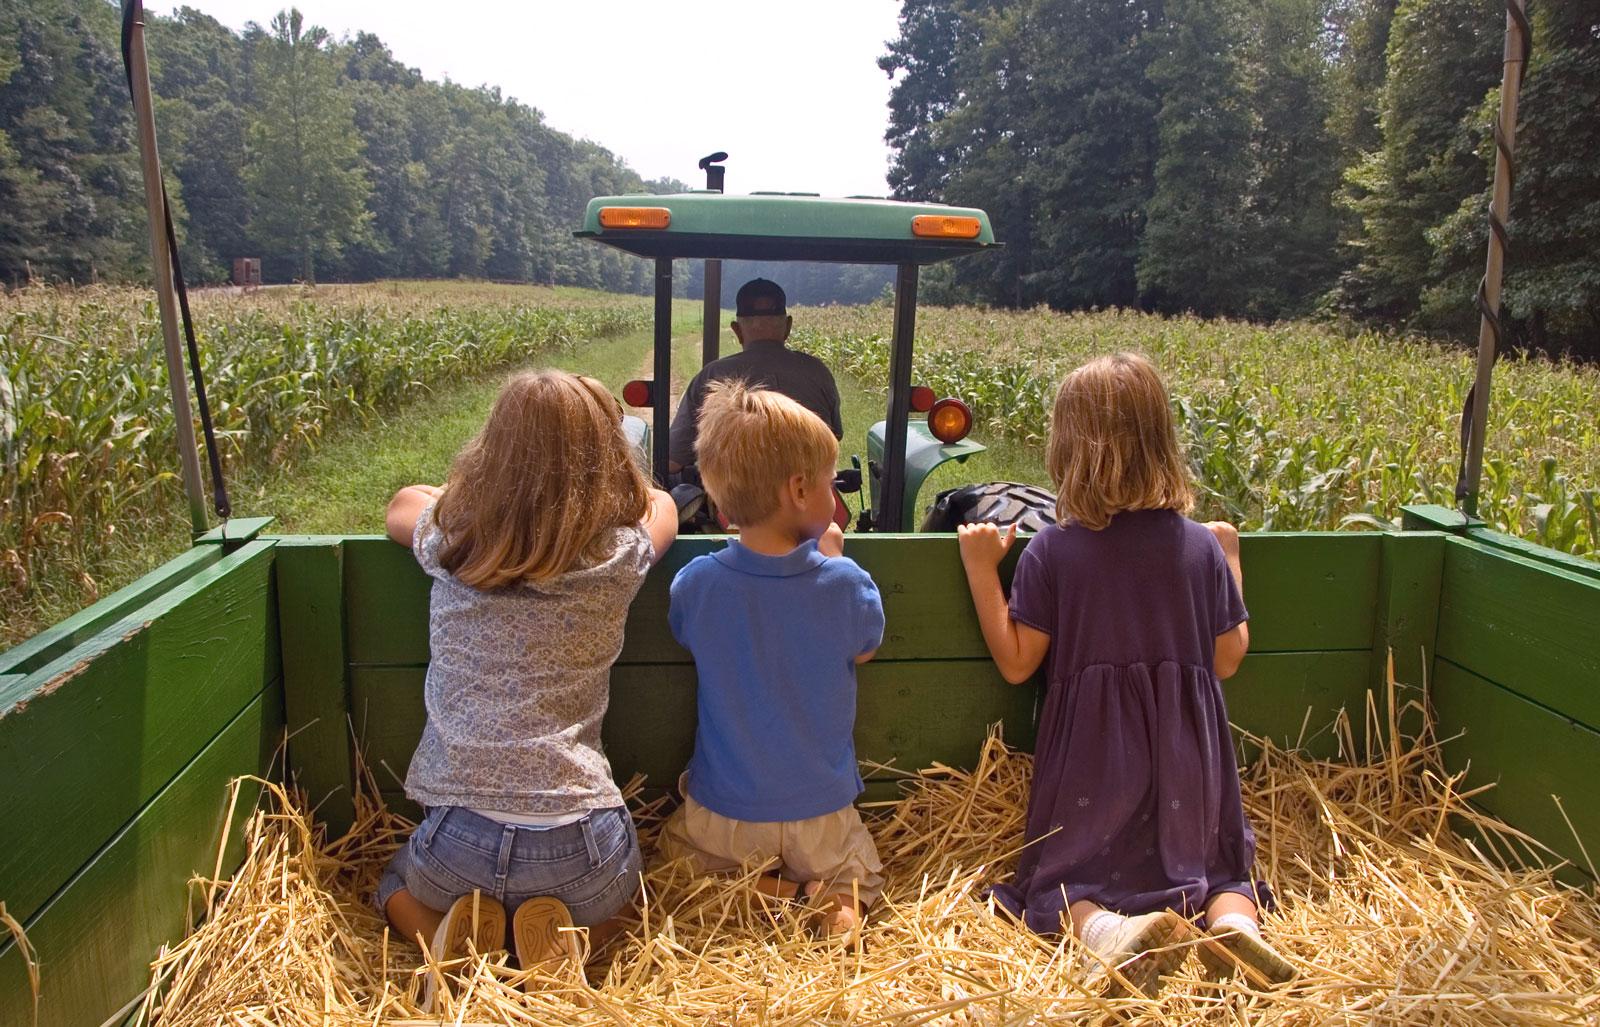 Children on a hay rack ride